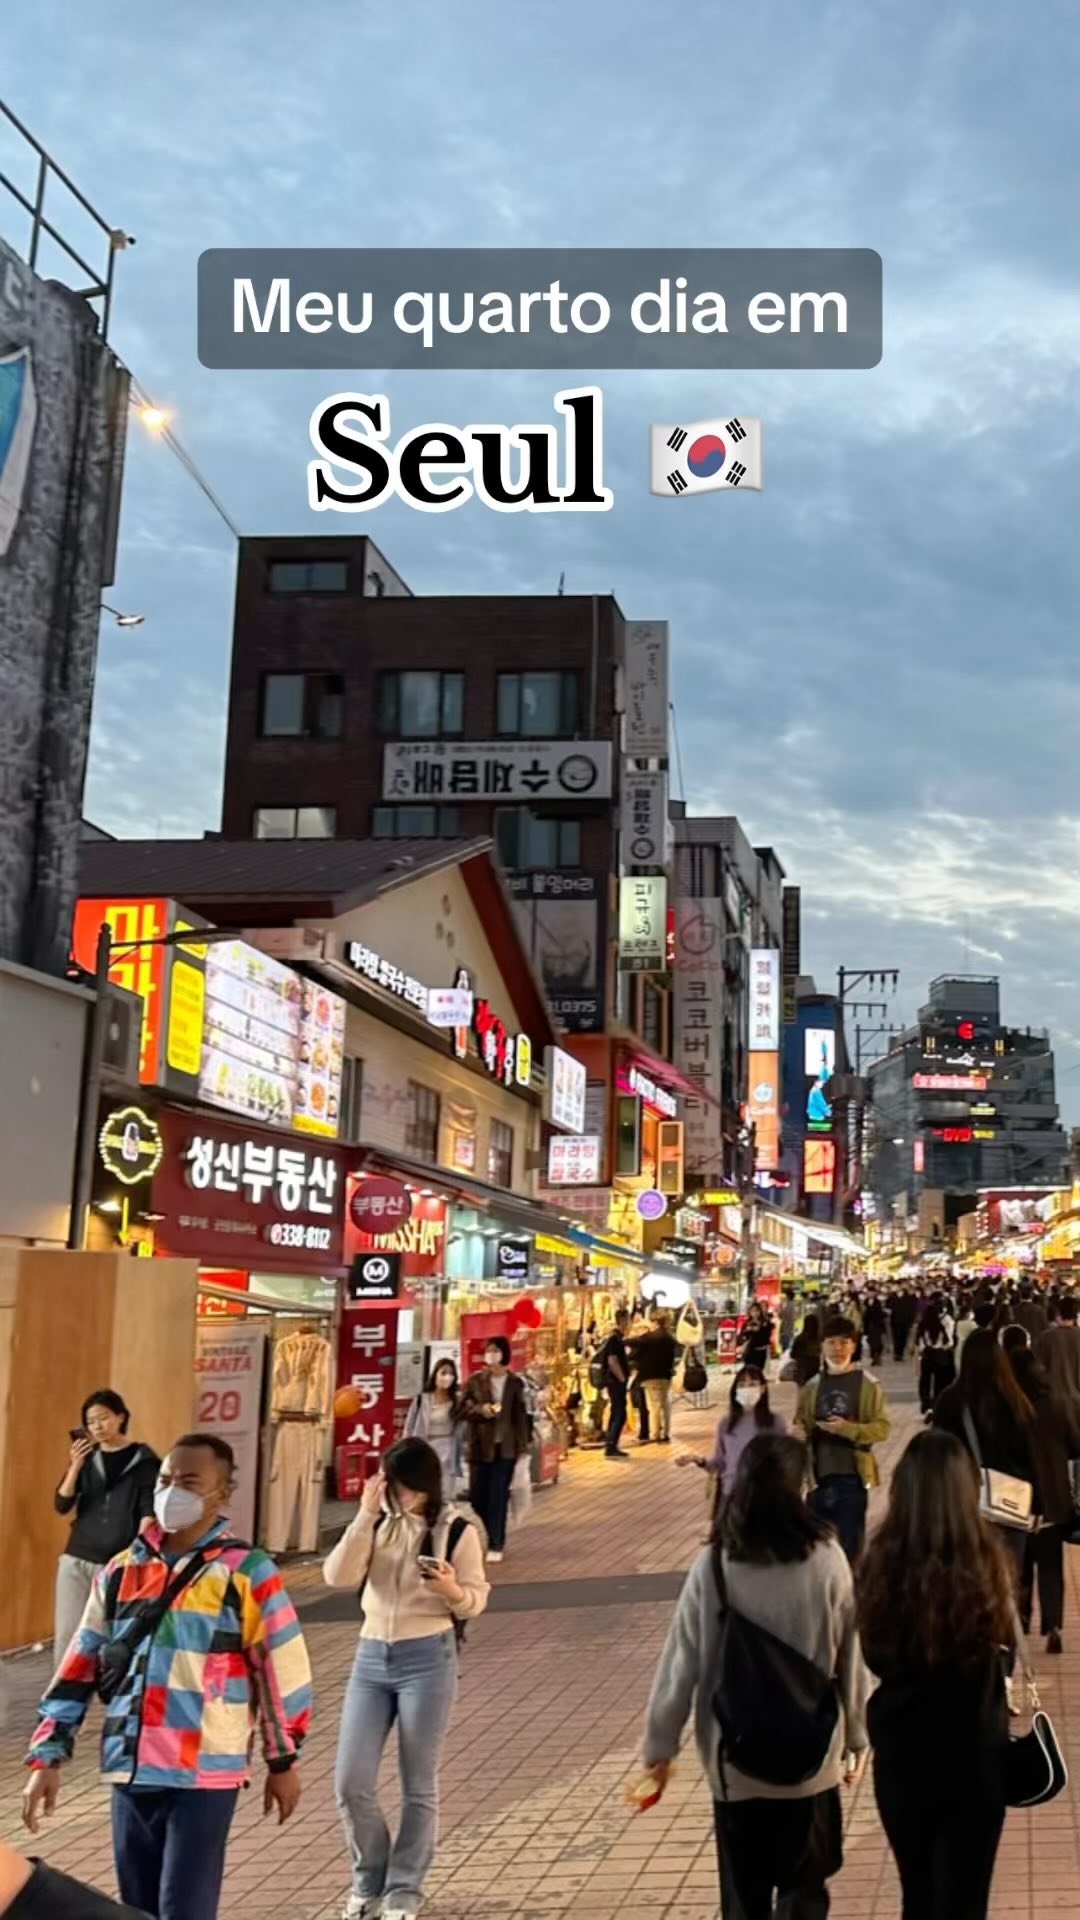 My fourth day in Seoul 🇰🇷